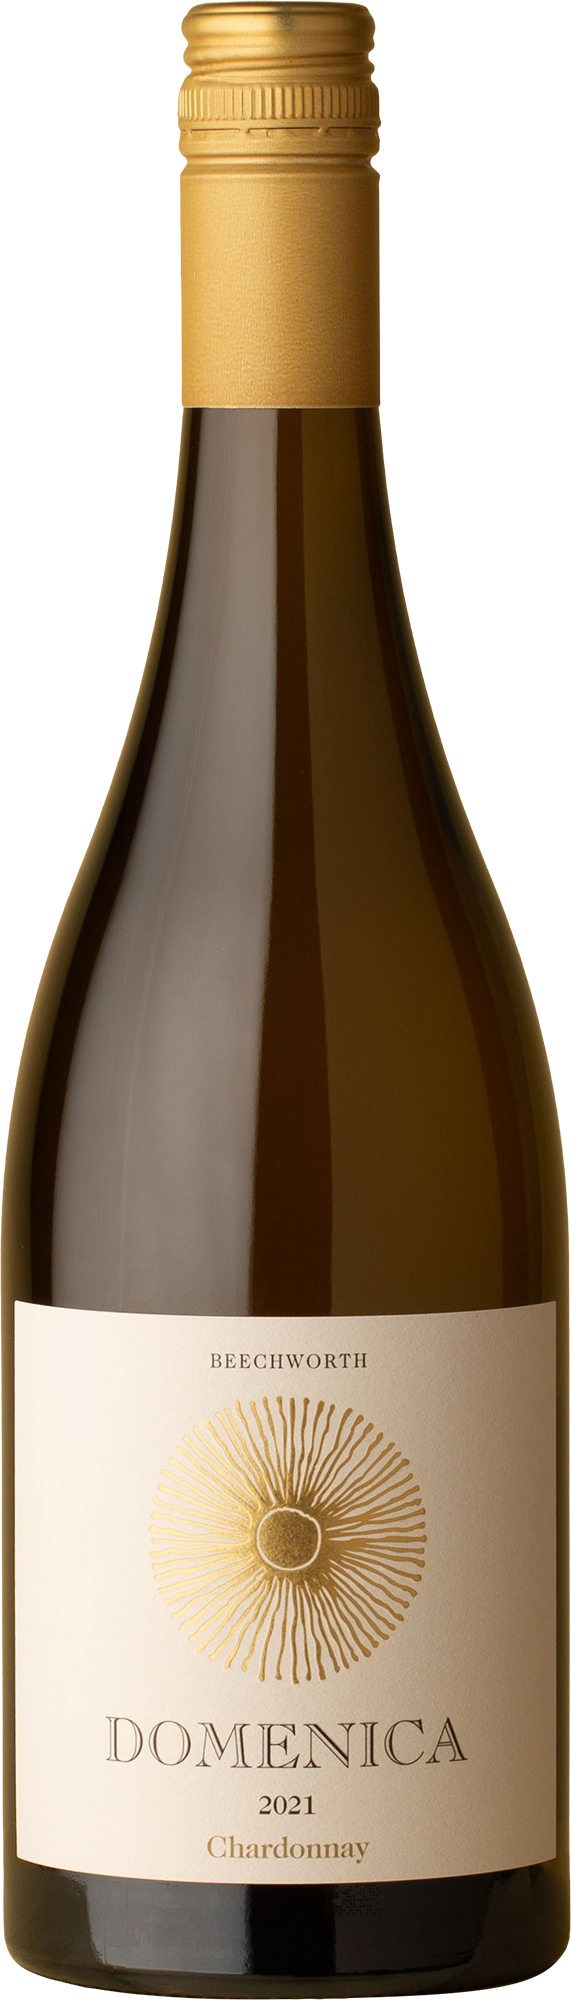 Domenica -  Chardonnay 2021